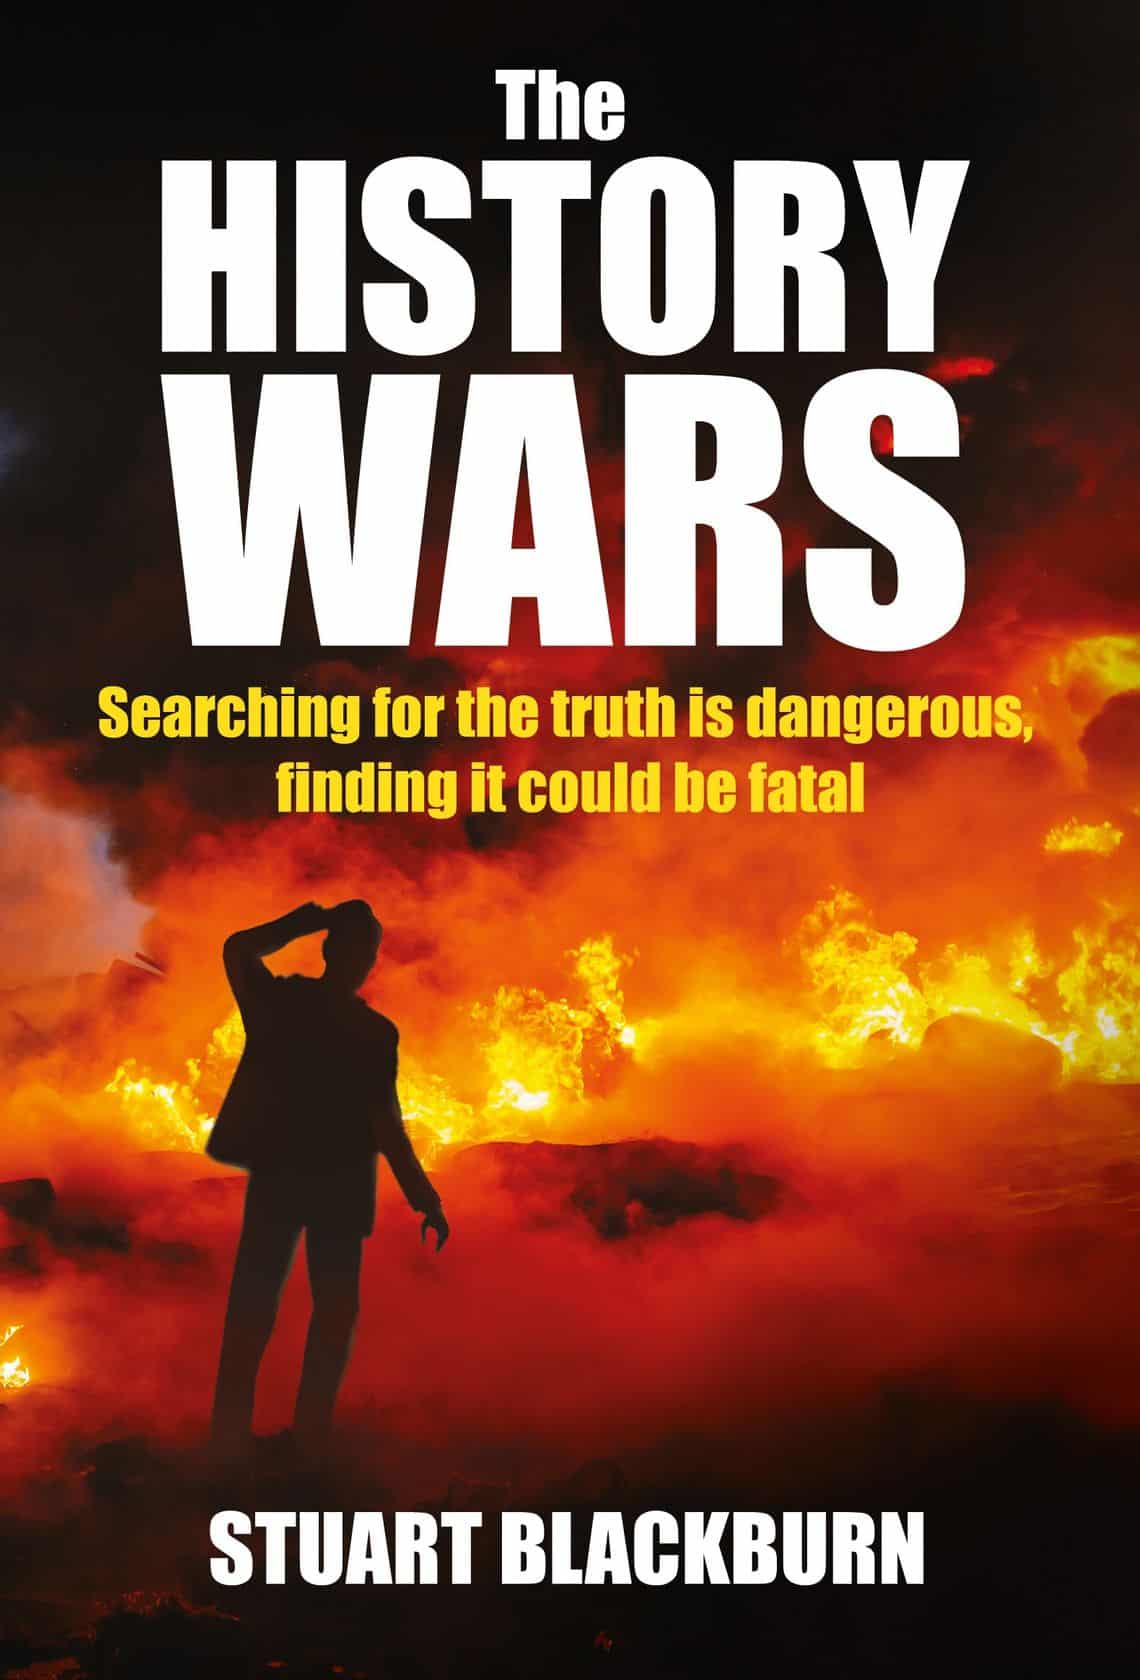 'The History Wars' by Stuart Blackburn